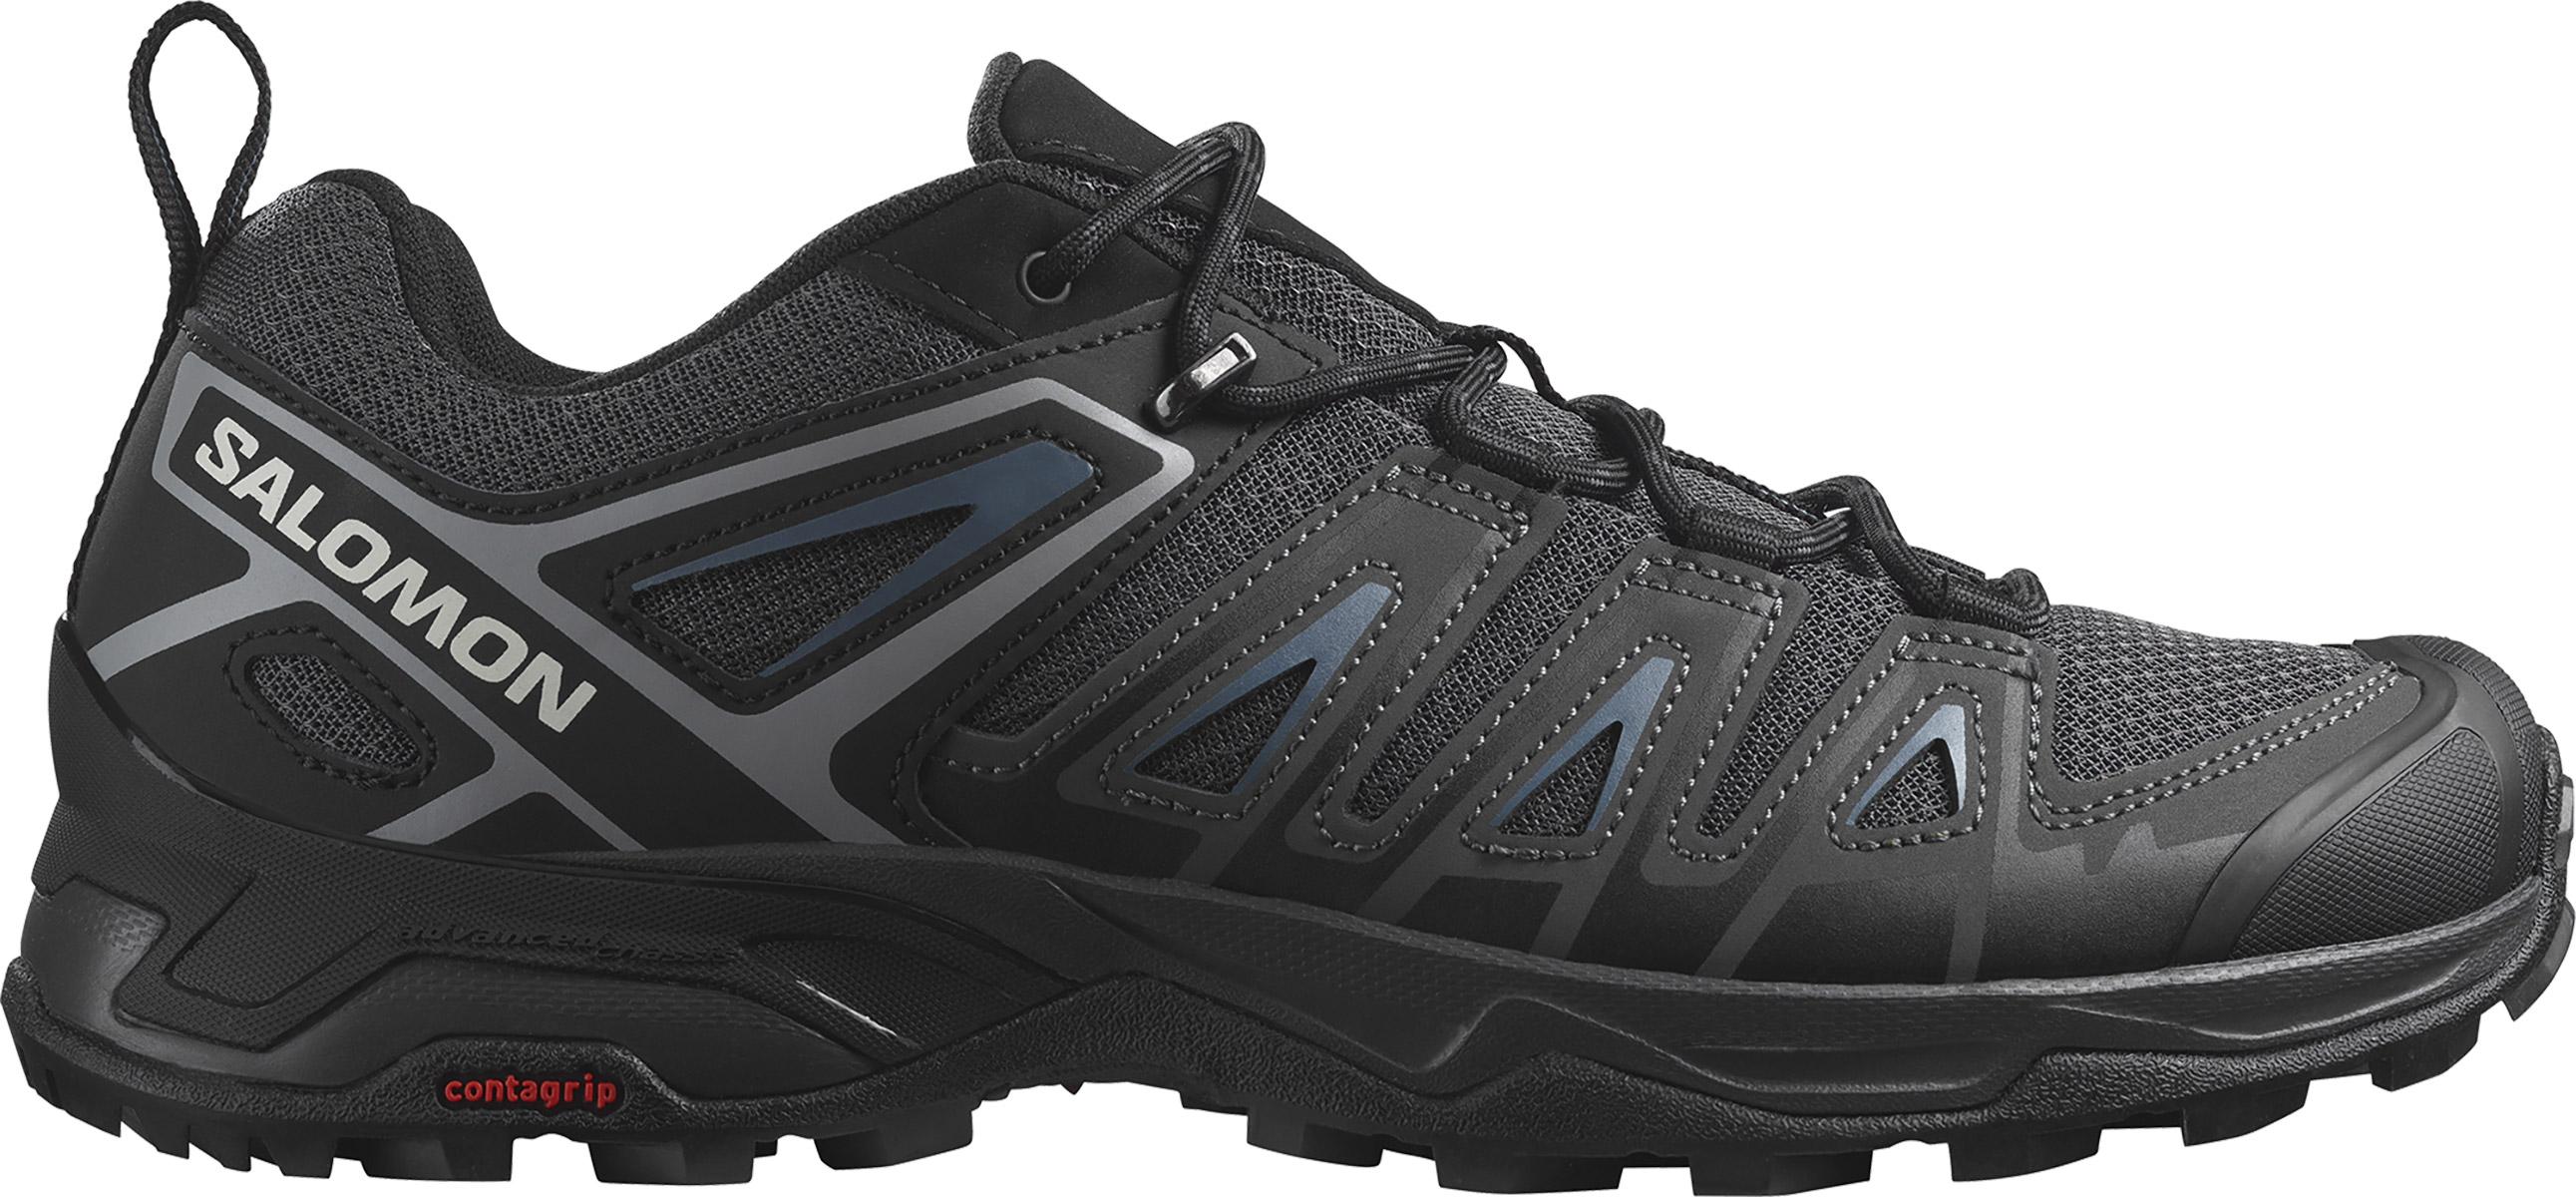 Salomon X Ultra Pioneer Aero Hiking Shoes - Black/ebony/blue